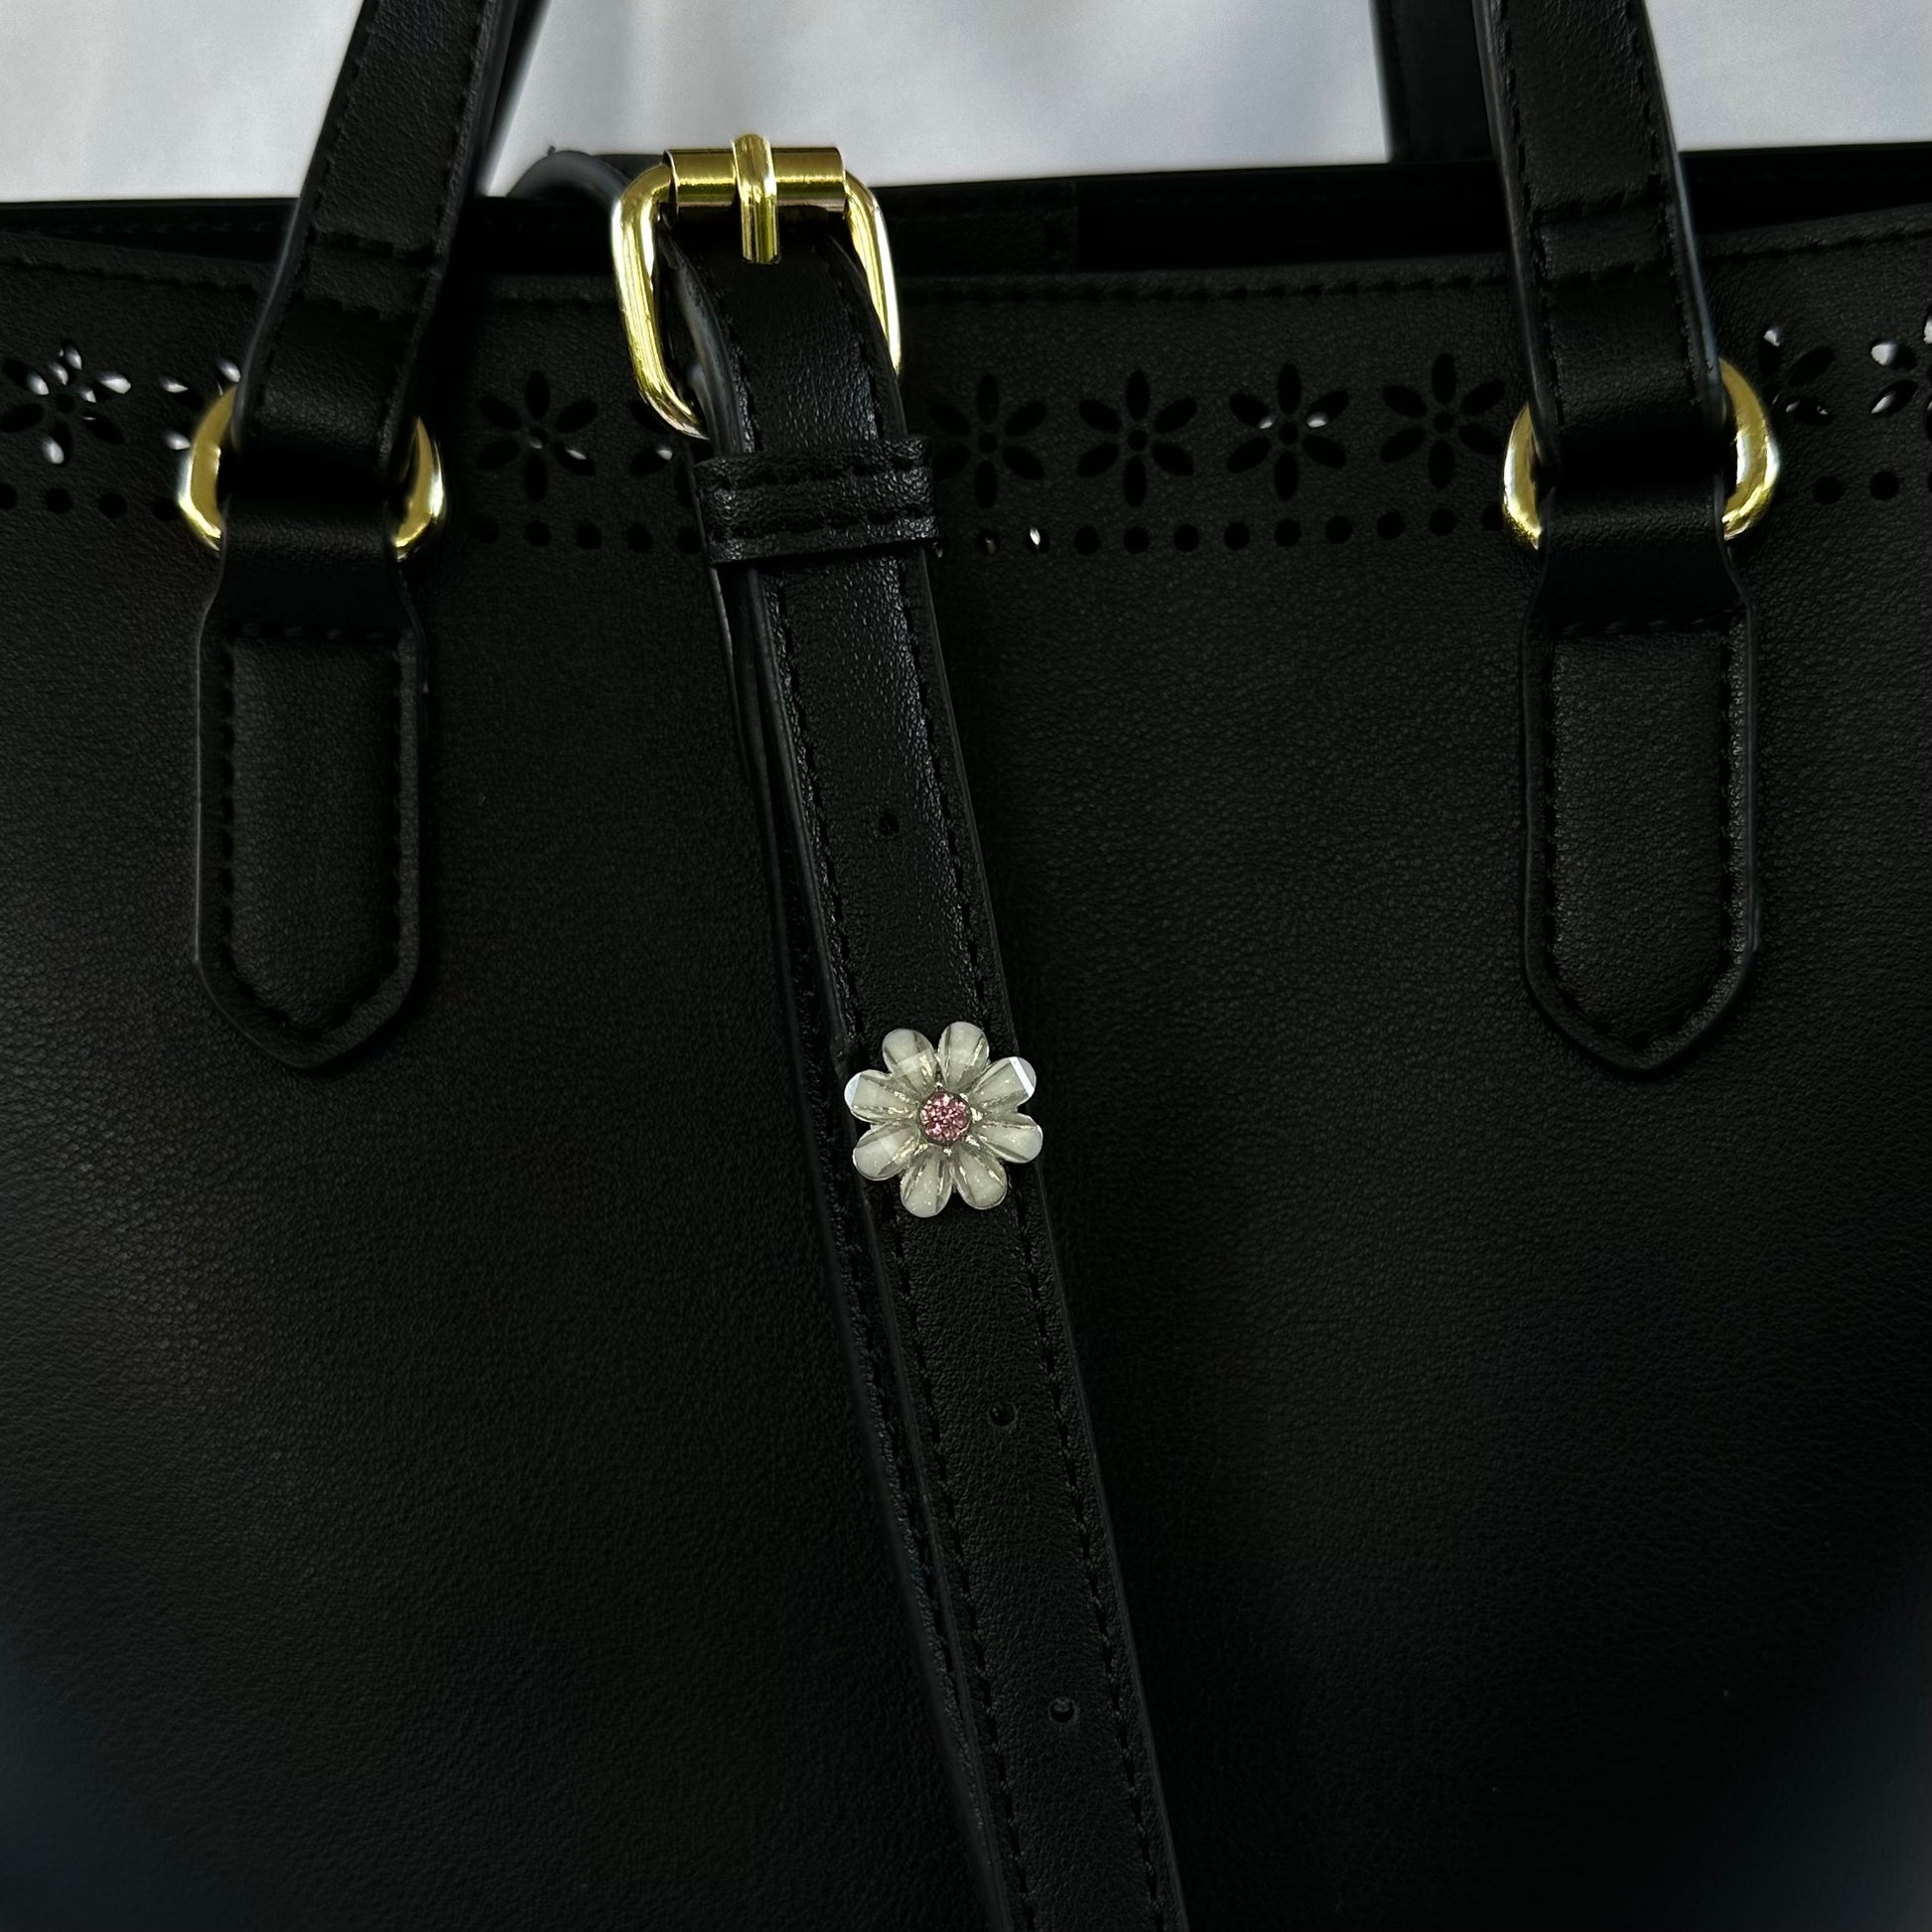 Flower Belt and Bag Charm